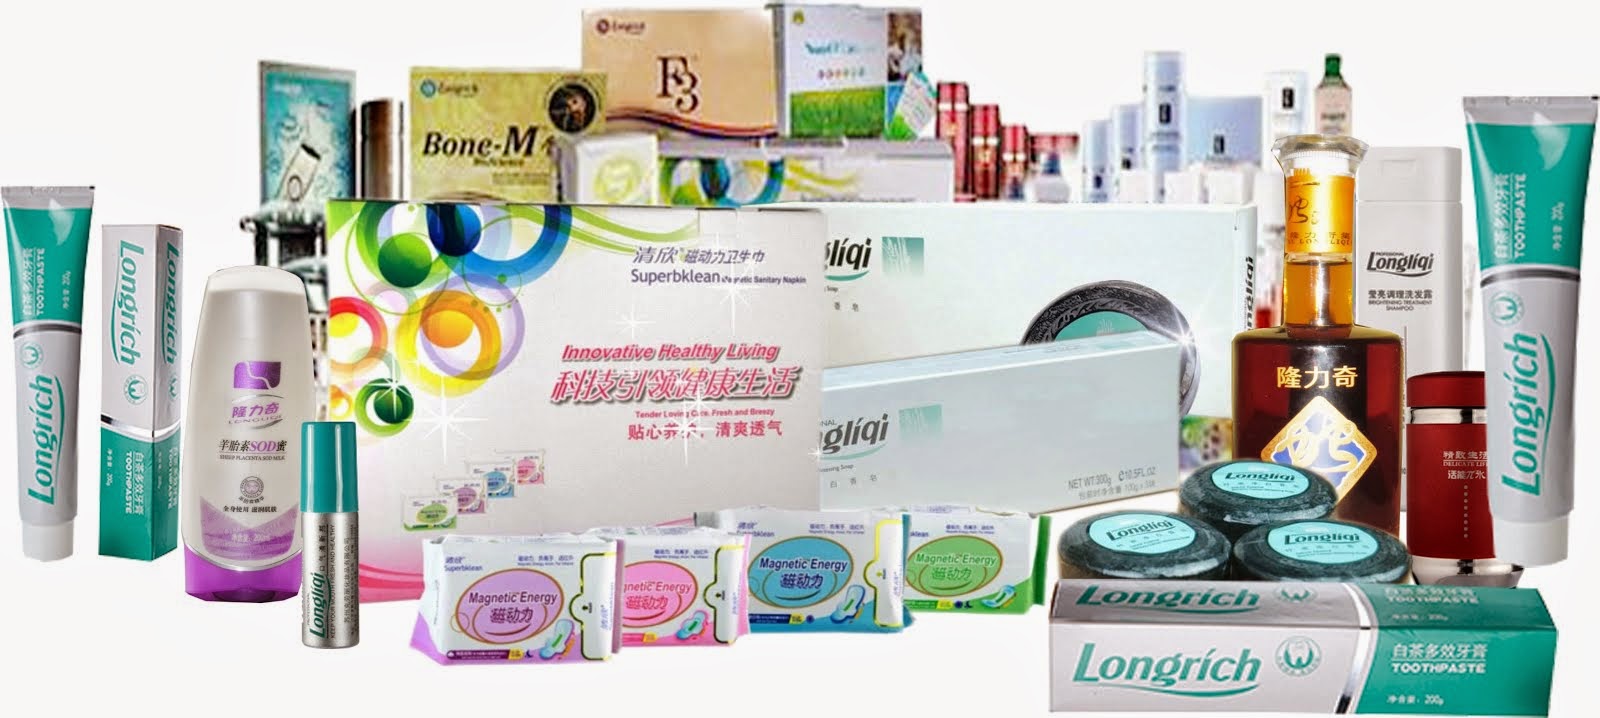 longrich products